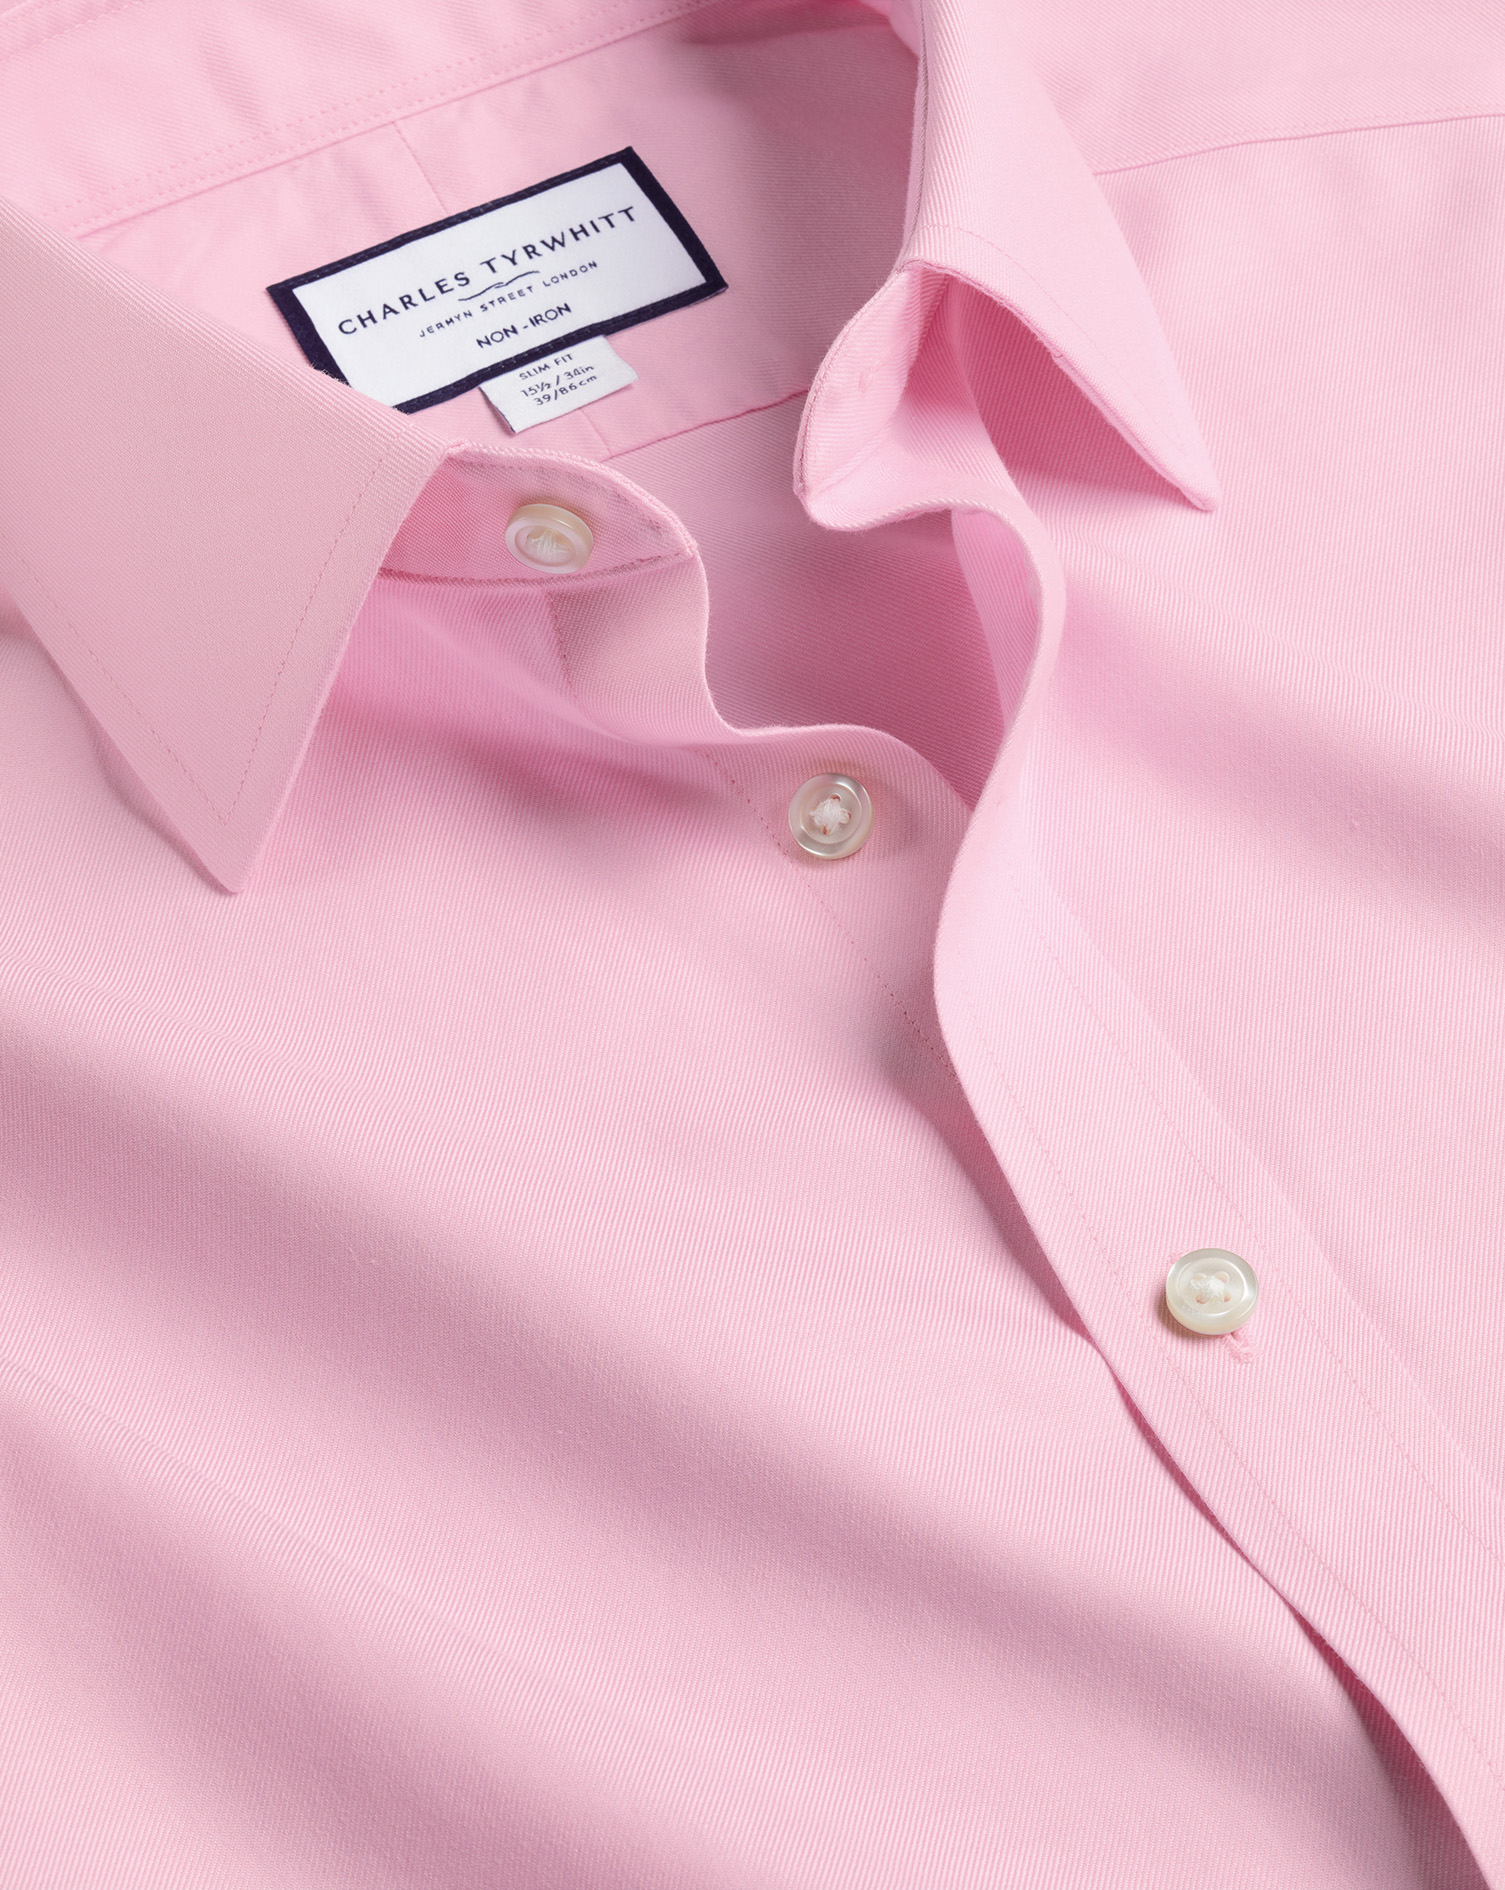 Men's Charles Tyrwhitt Non-Iron Twill Dress Shirt - Pink French Cuff Size Medium Cotton
